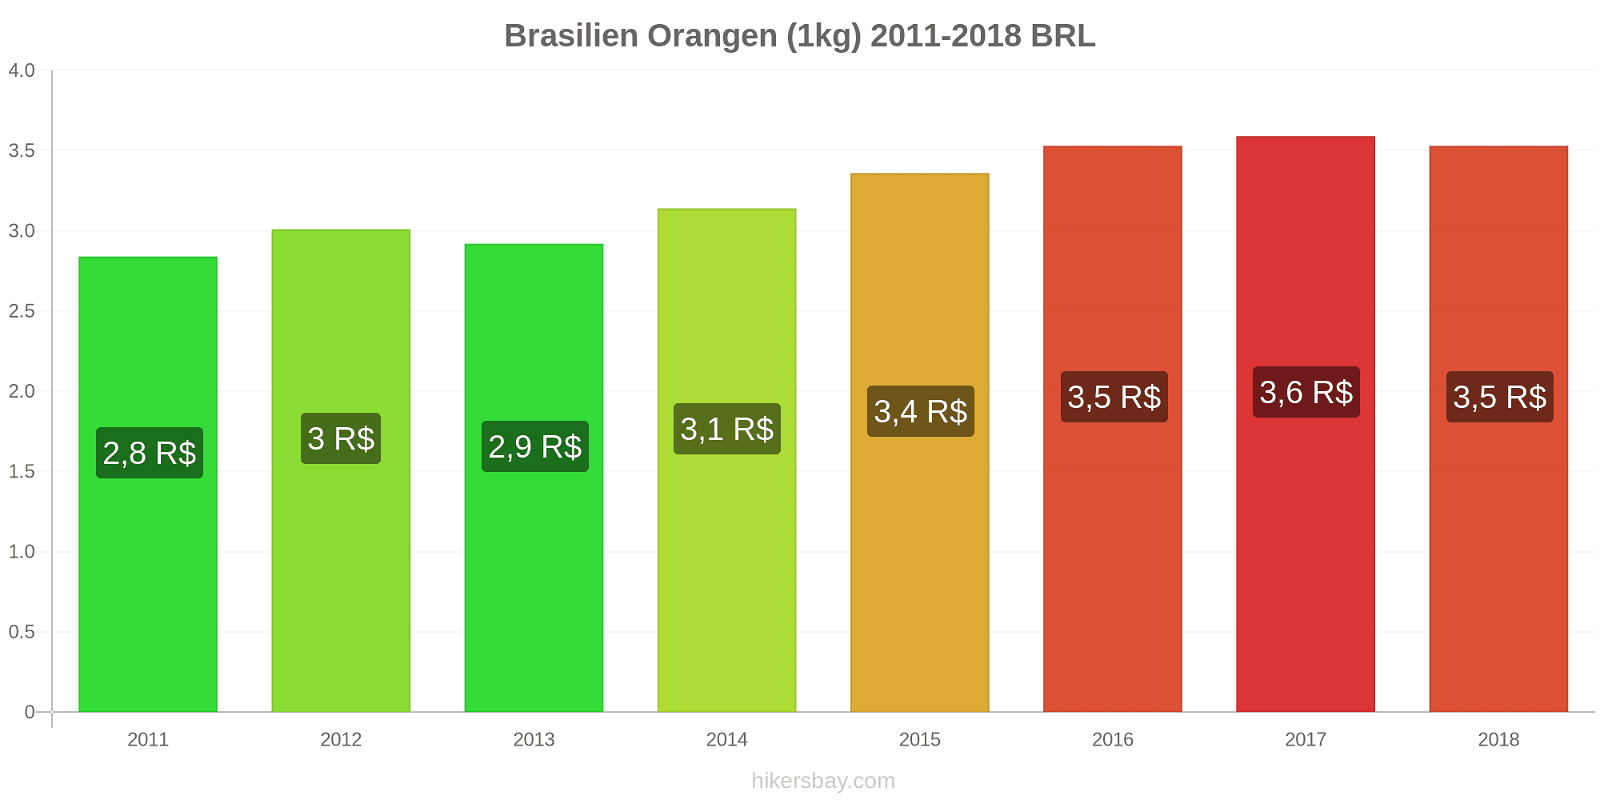 Brasilien Preisänderungen Orangen (1kg) hikersbay.com